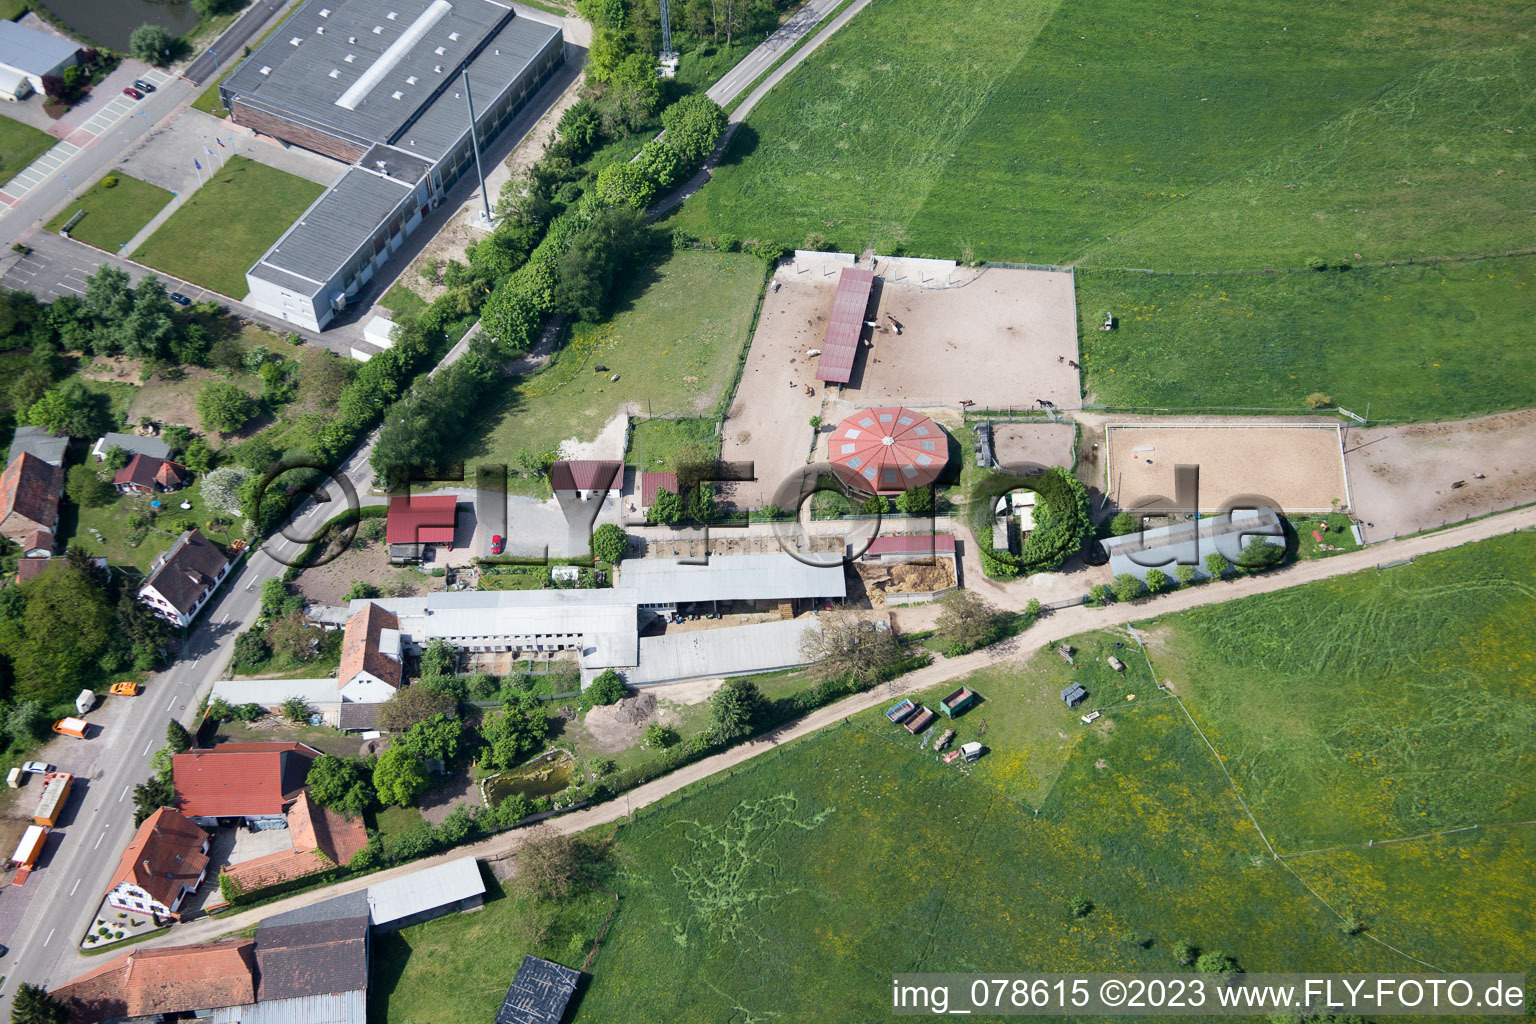 Drone image of Neulauterburg in the state Rhineland-Palatinate, Germany